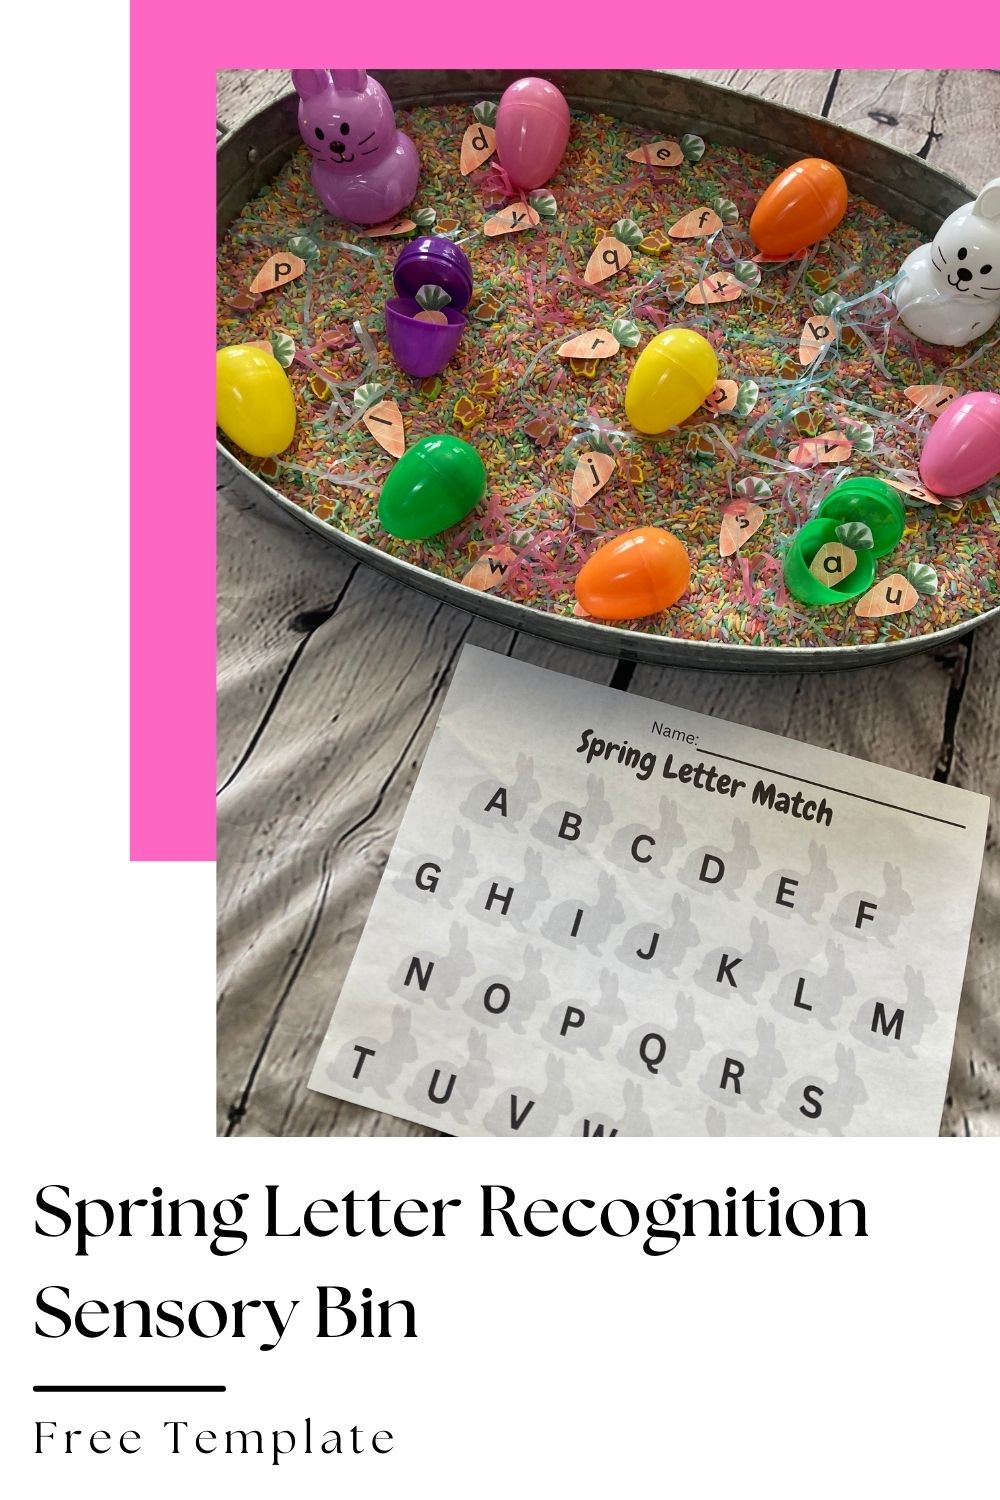 Spring Letter Recognition Sensory Bin